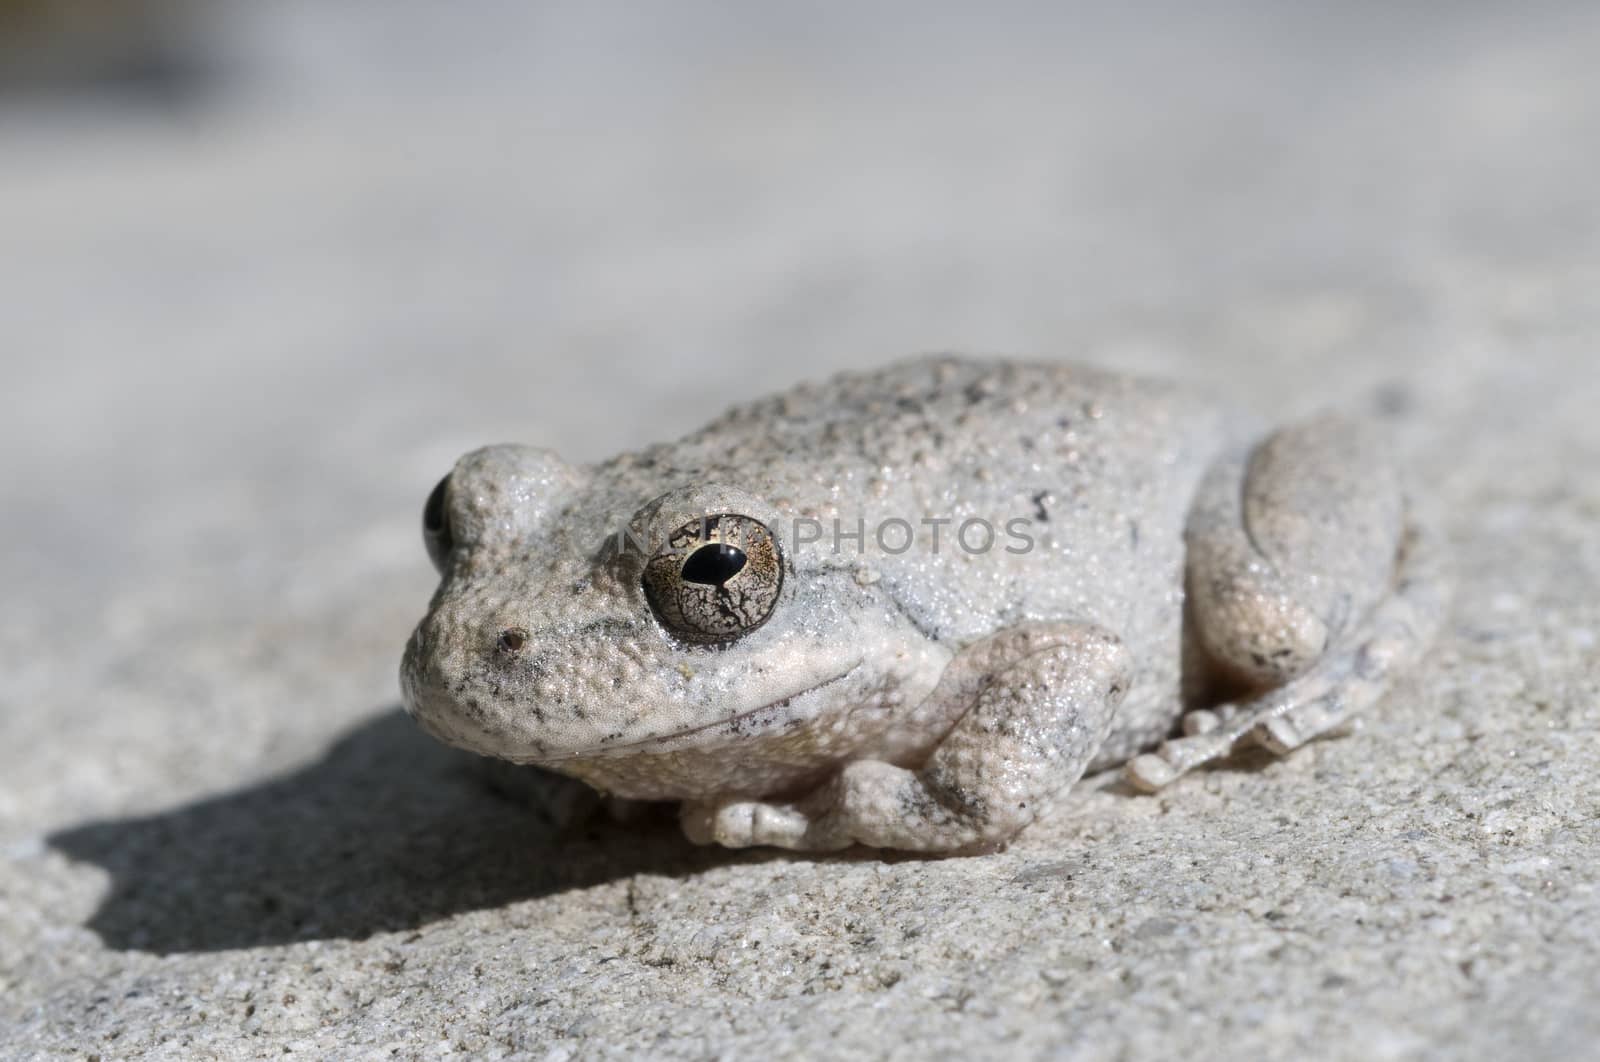 A wild grey Californian Treefrog blending into stone